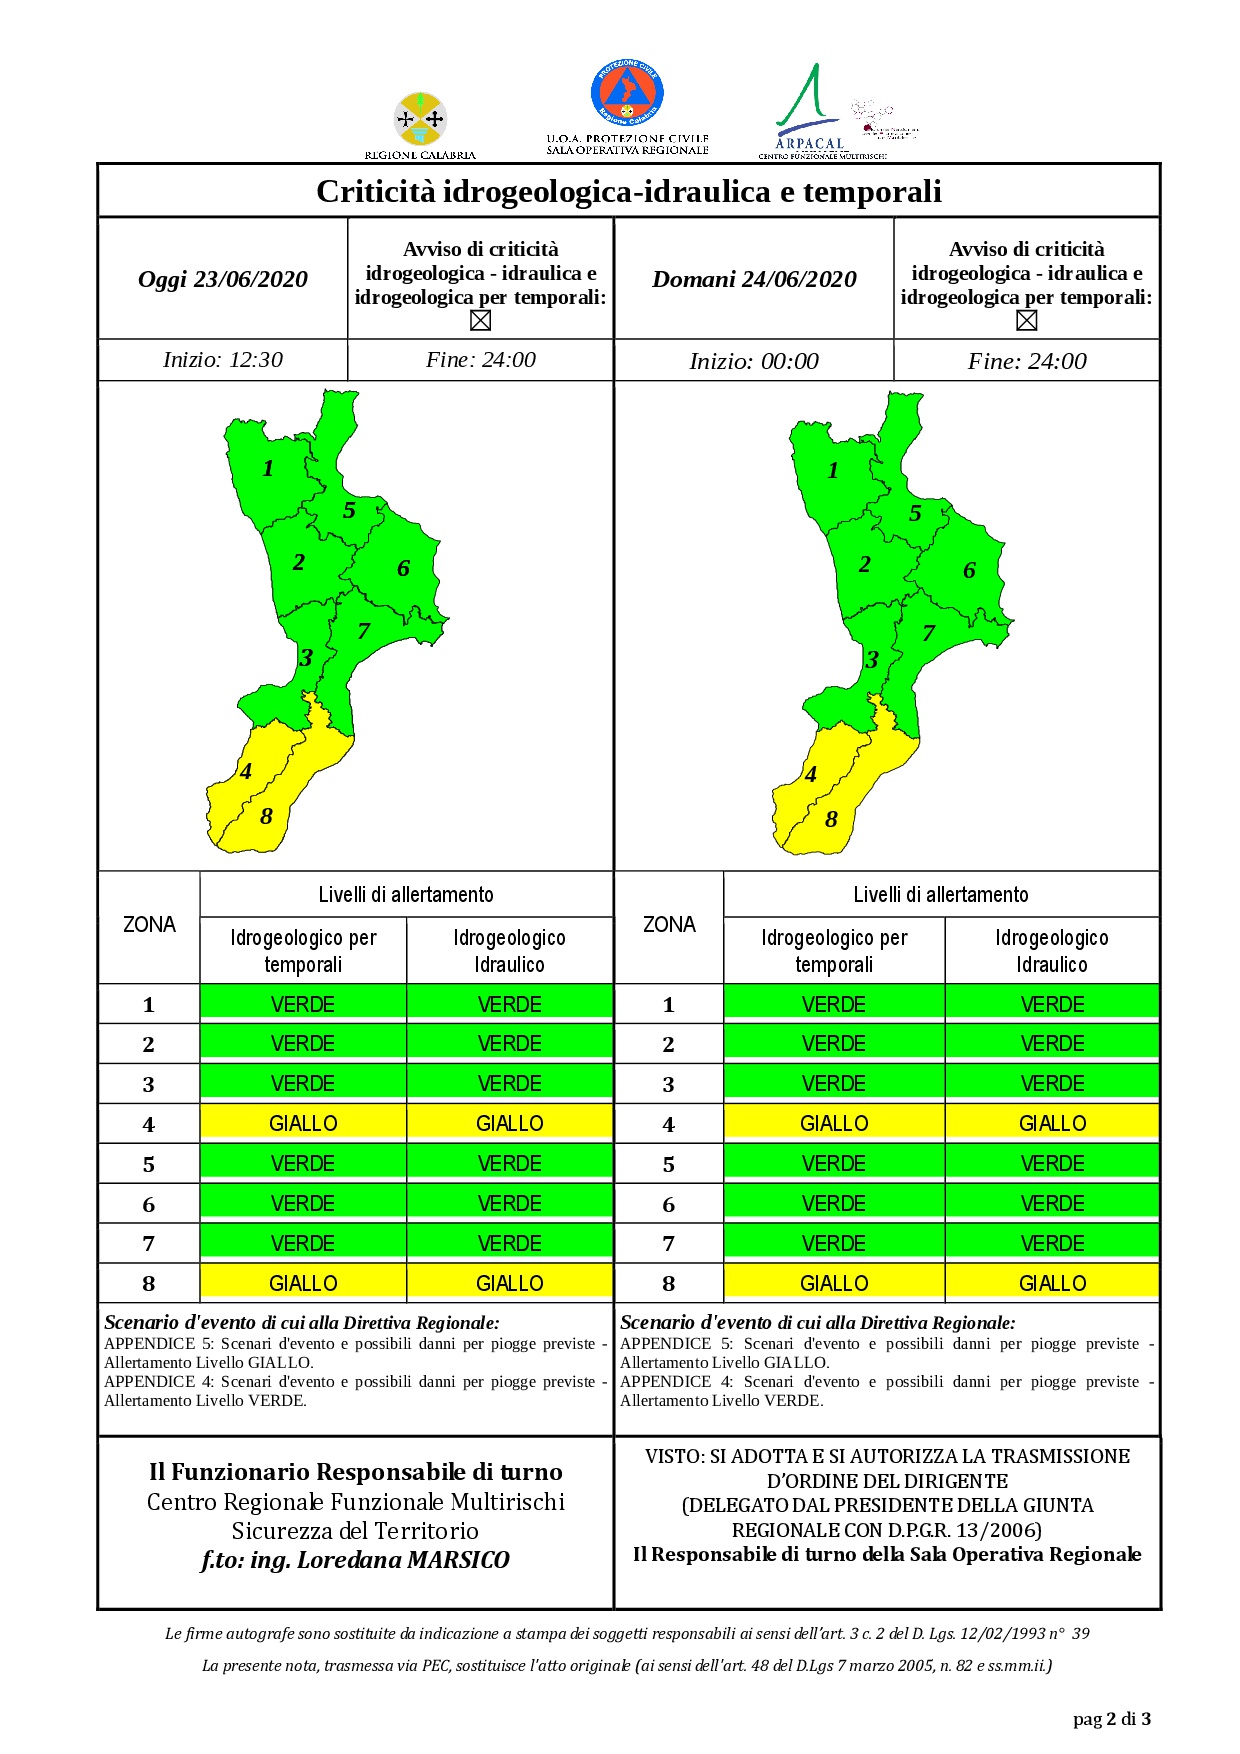 Criticità idrogeologica-idraulica e temporali in Calabria 23-06-2020